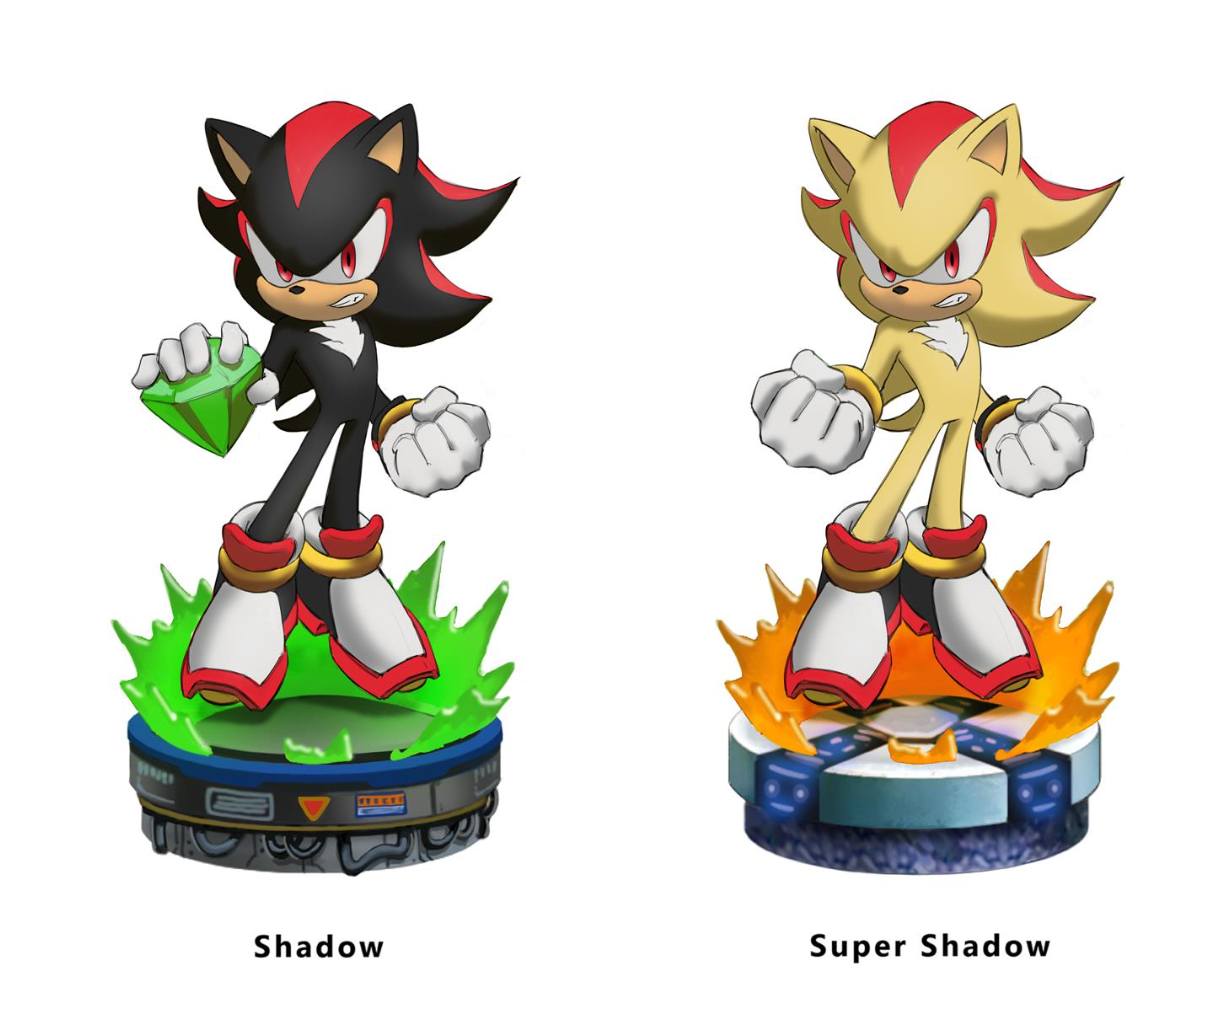 Sonic The Hedgehog™ - Shadow the Hedgehog PVC Sneak Peek